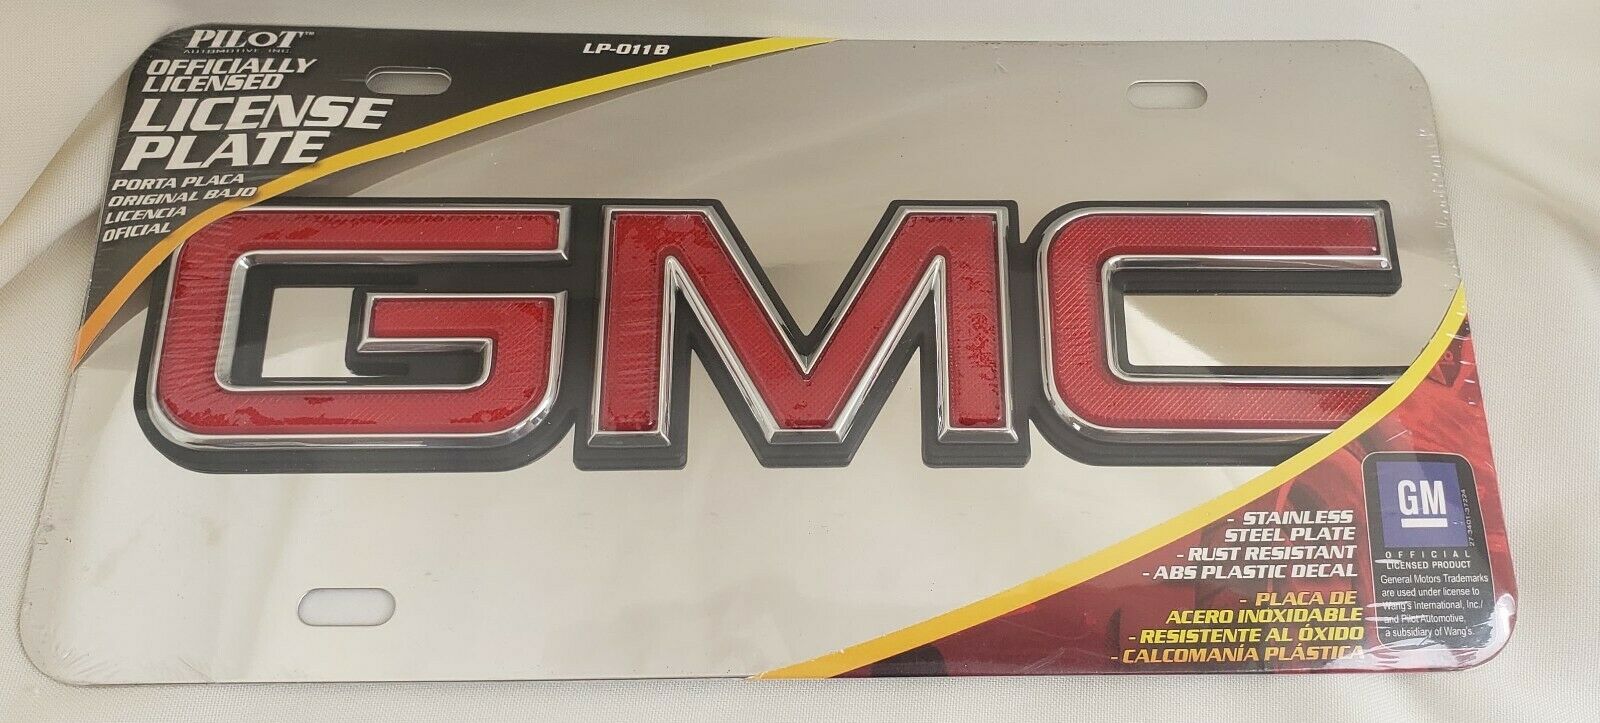 Pilot GMC Emblem License Plate 3-D